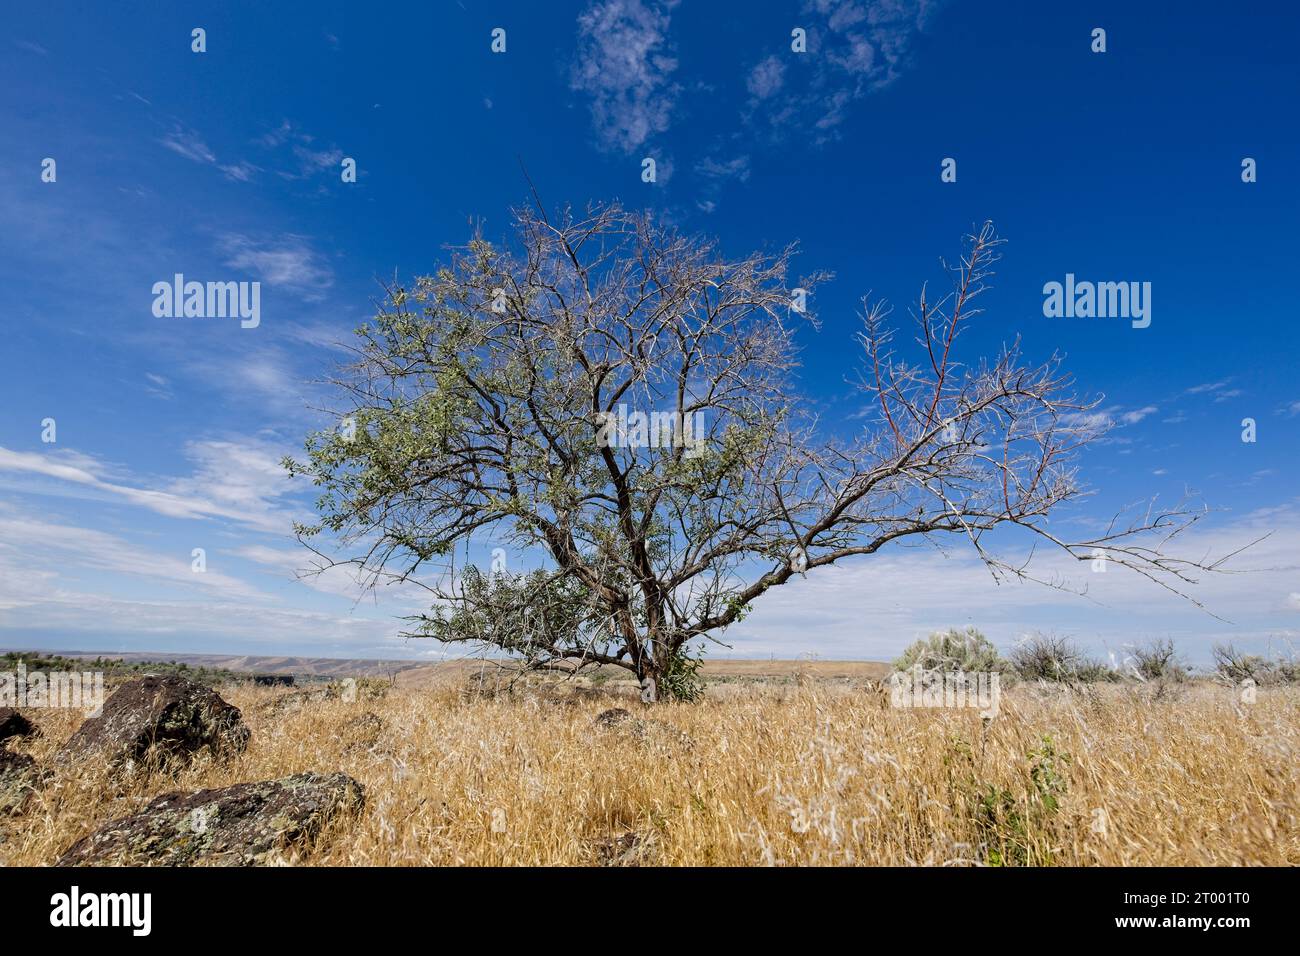 Landscape photo of tree in grassy field. Stock Photo